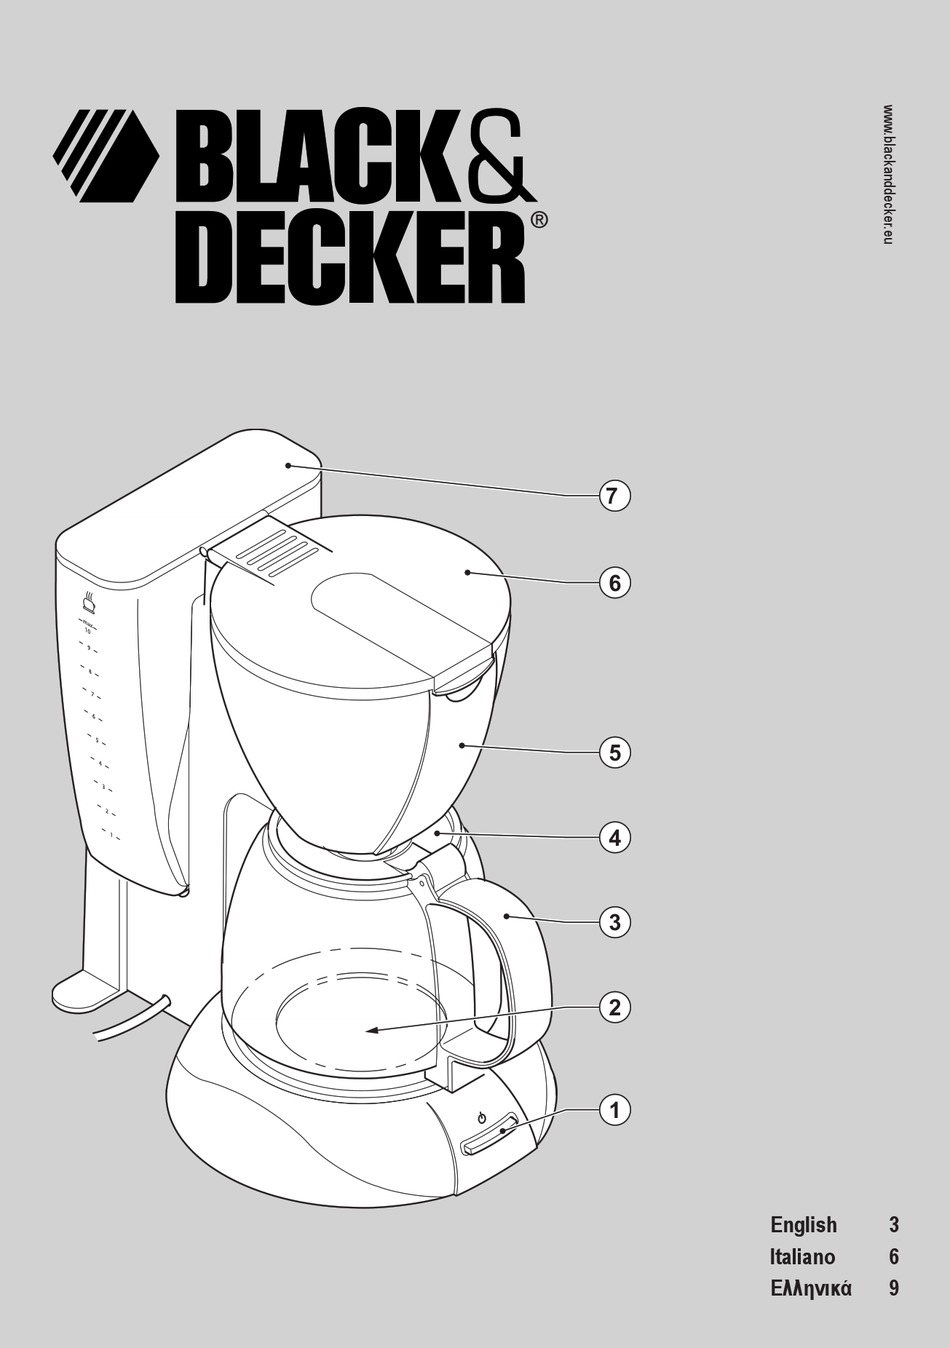 BLACK & DECKER DCM16 USE AND CARE BOOK MANUAL Pdf Download